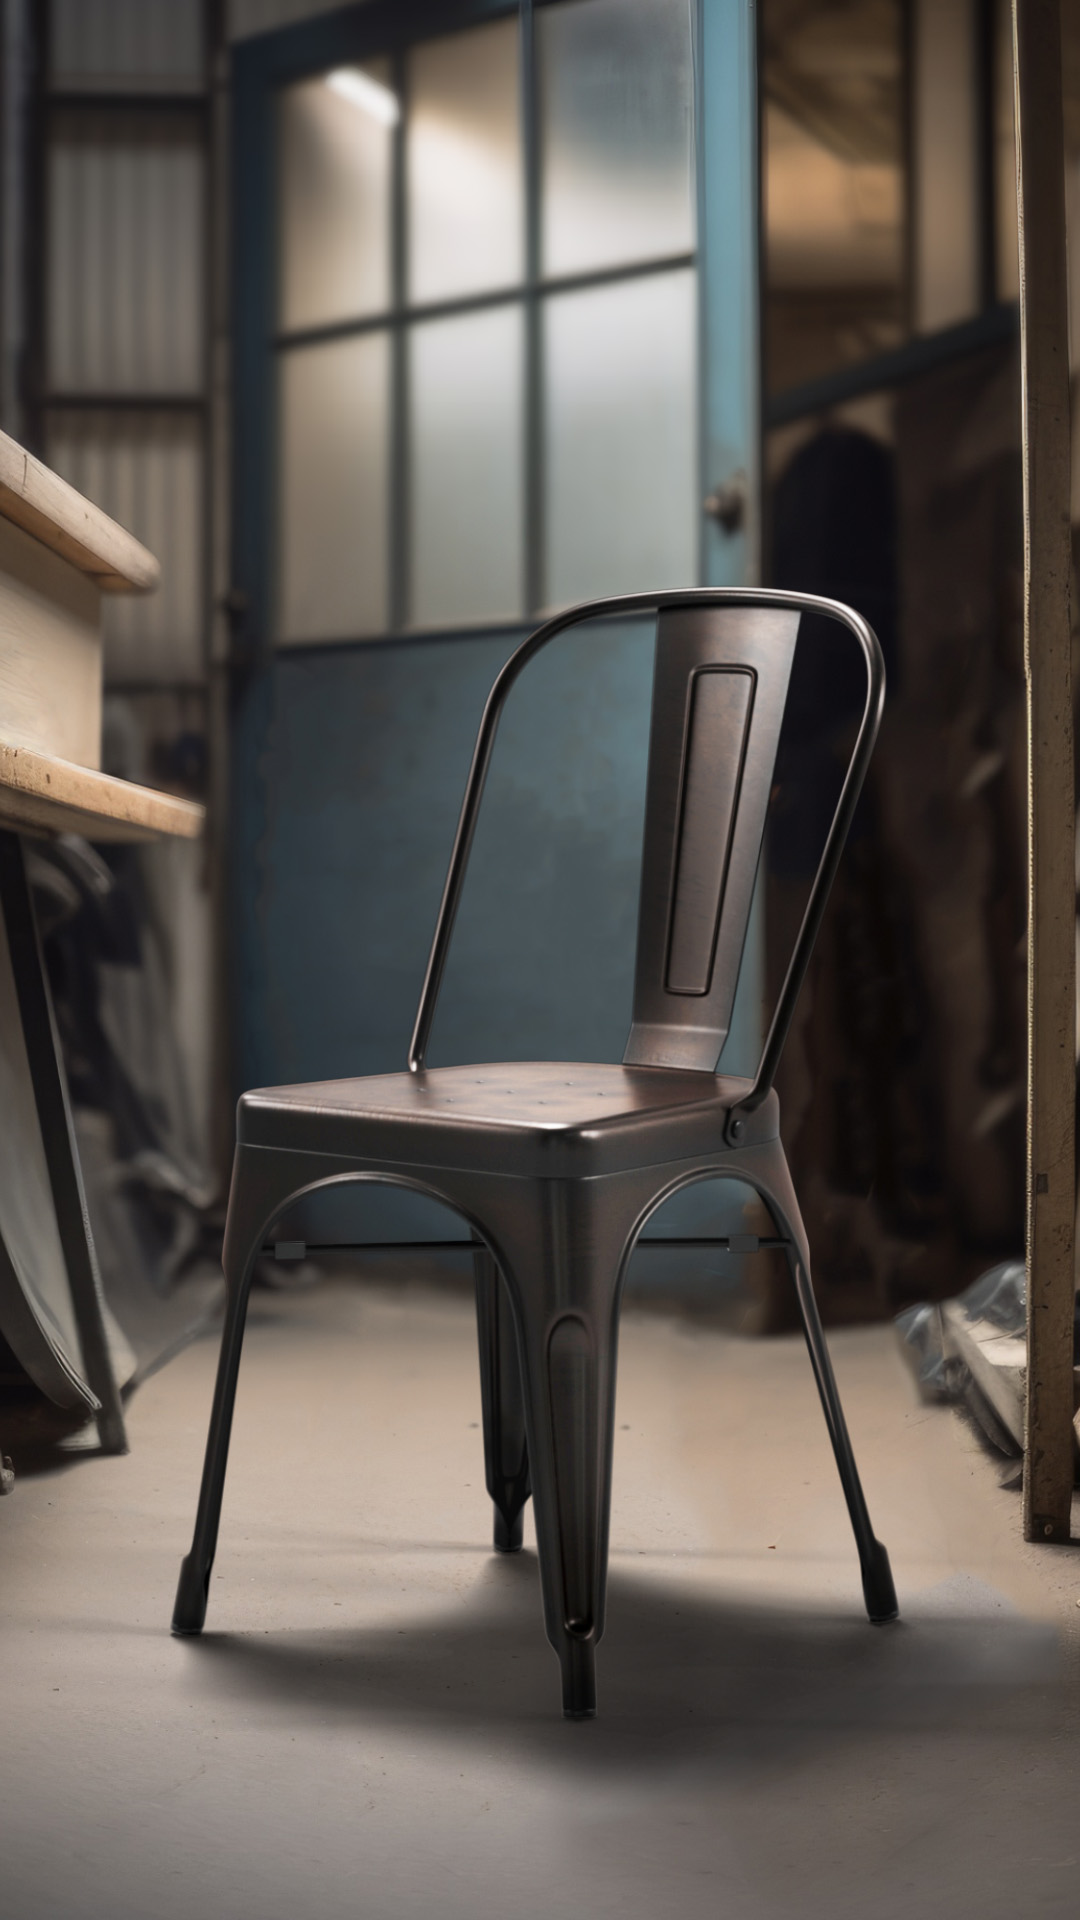 Portfolio image about workshop chair